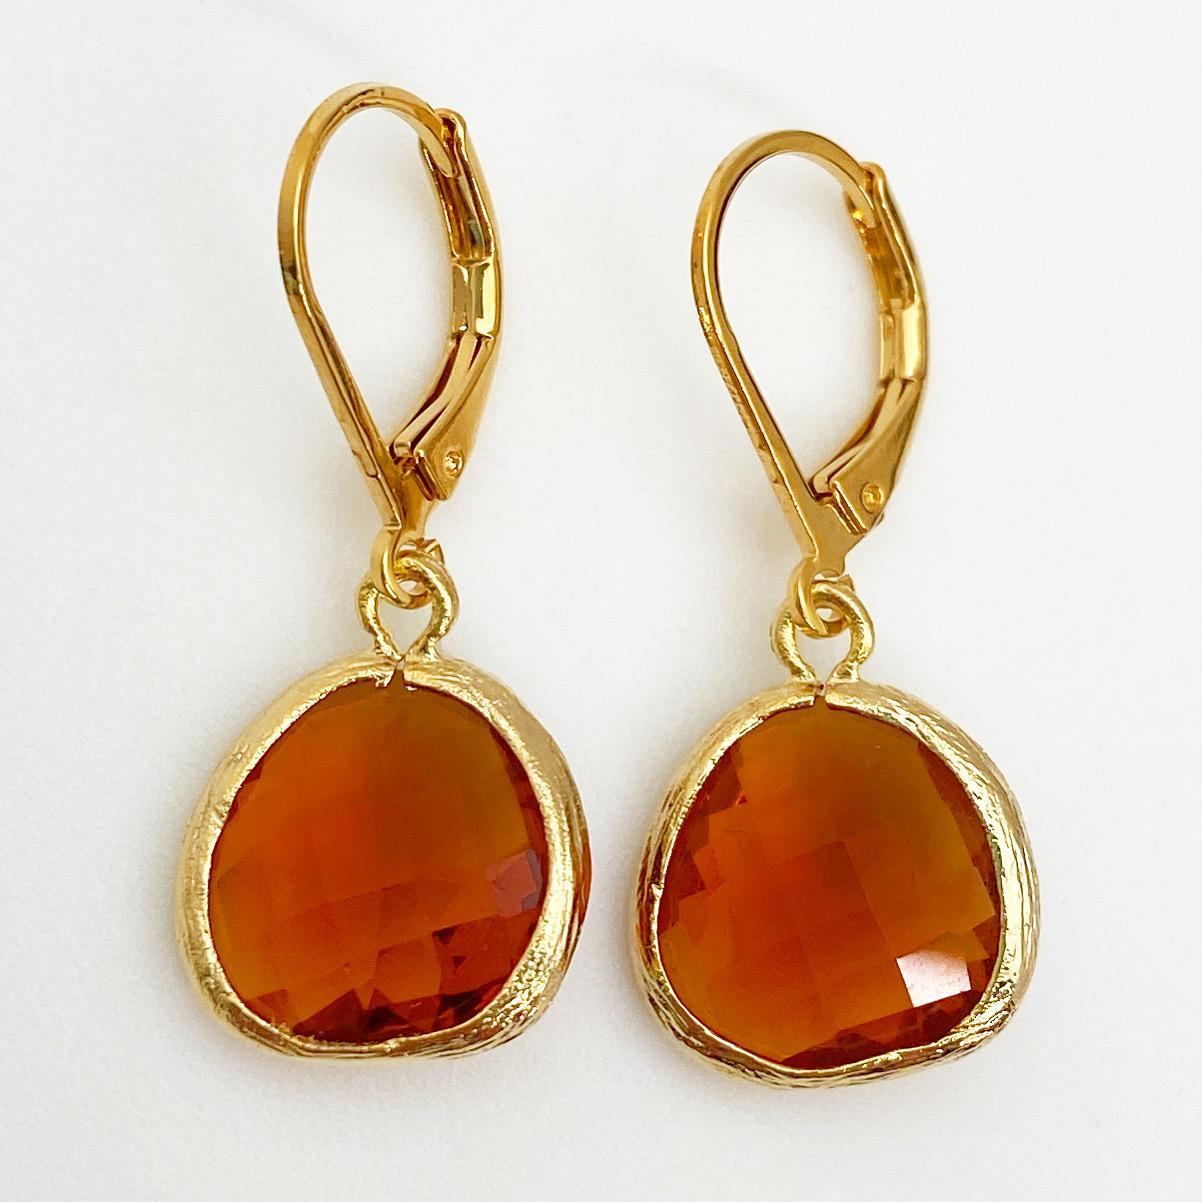 Earrings - Honey Crystal Drops - 14k Gold on Sterling